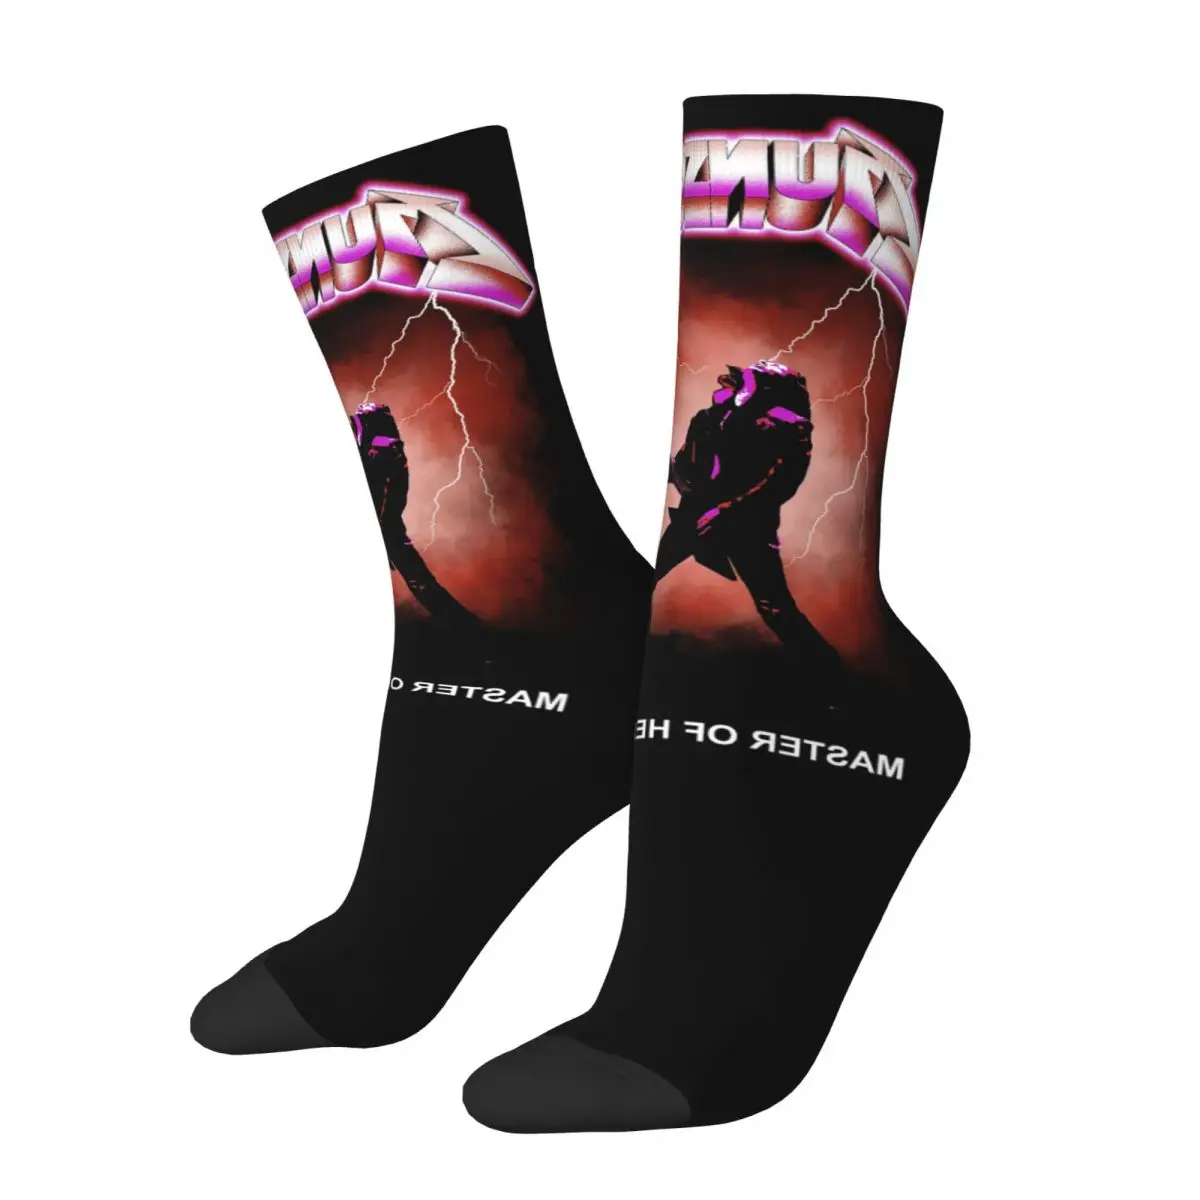 

Eddie Munson Heavy Metal Stranger Things Merch Socks Cozy Sport Long Socks Comfortable for Unisex Gifts